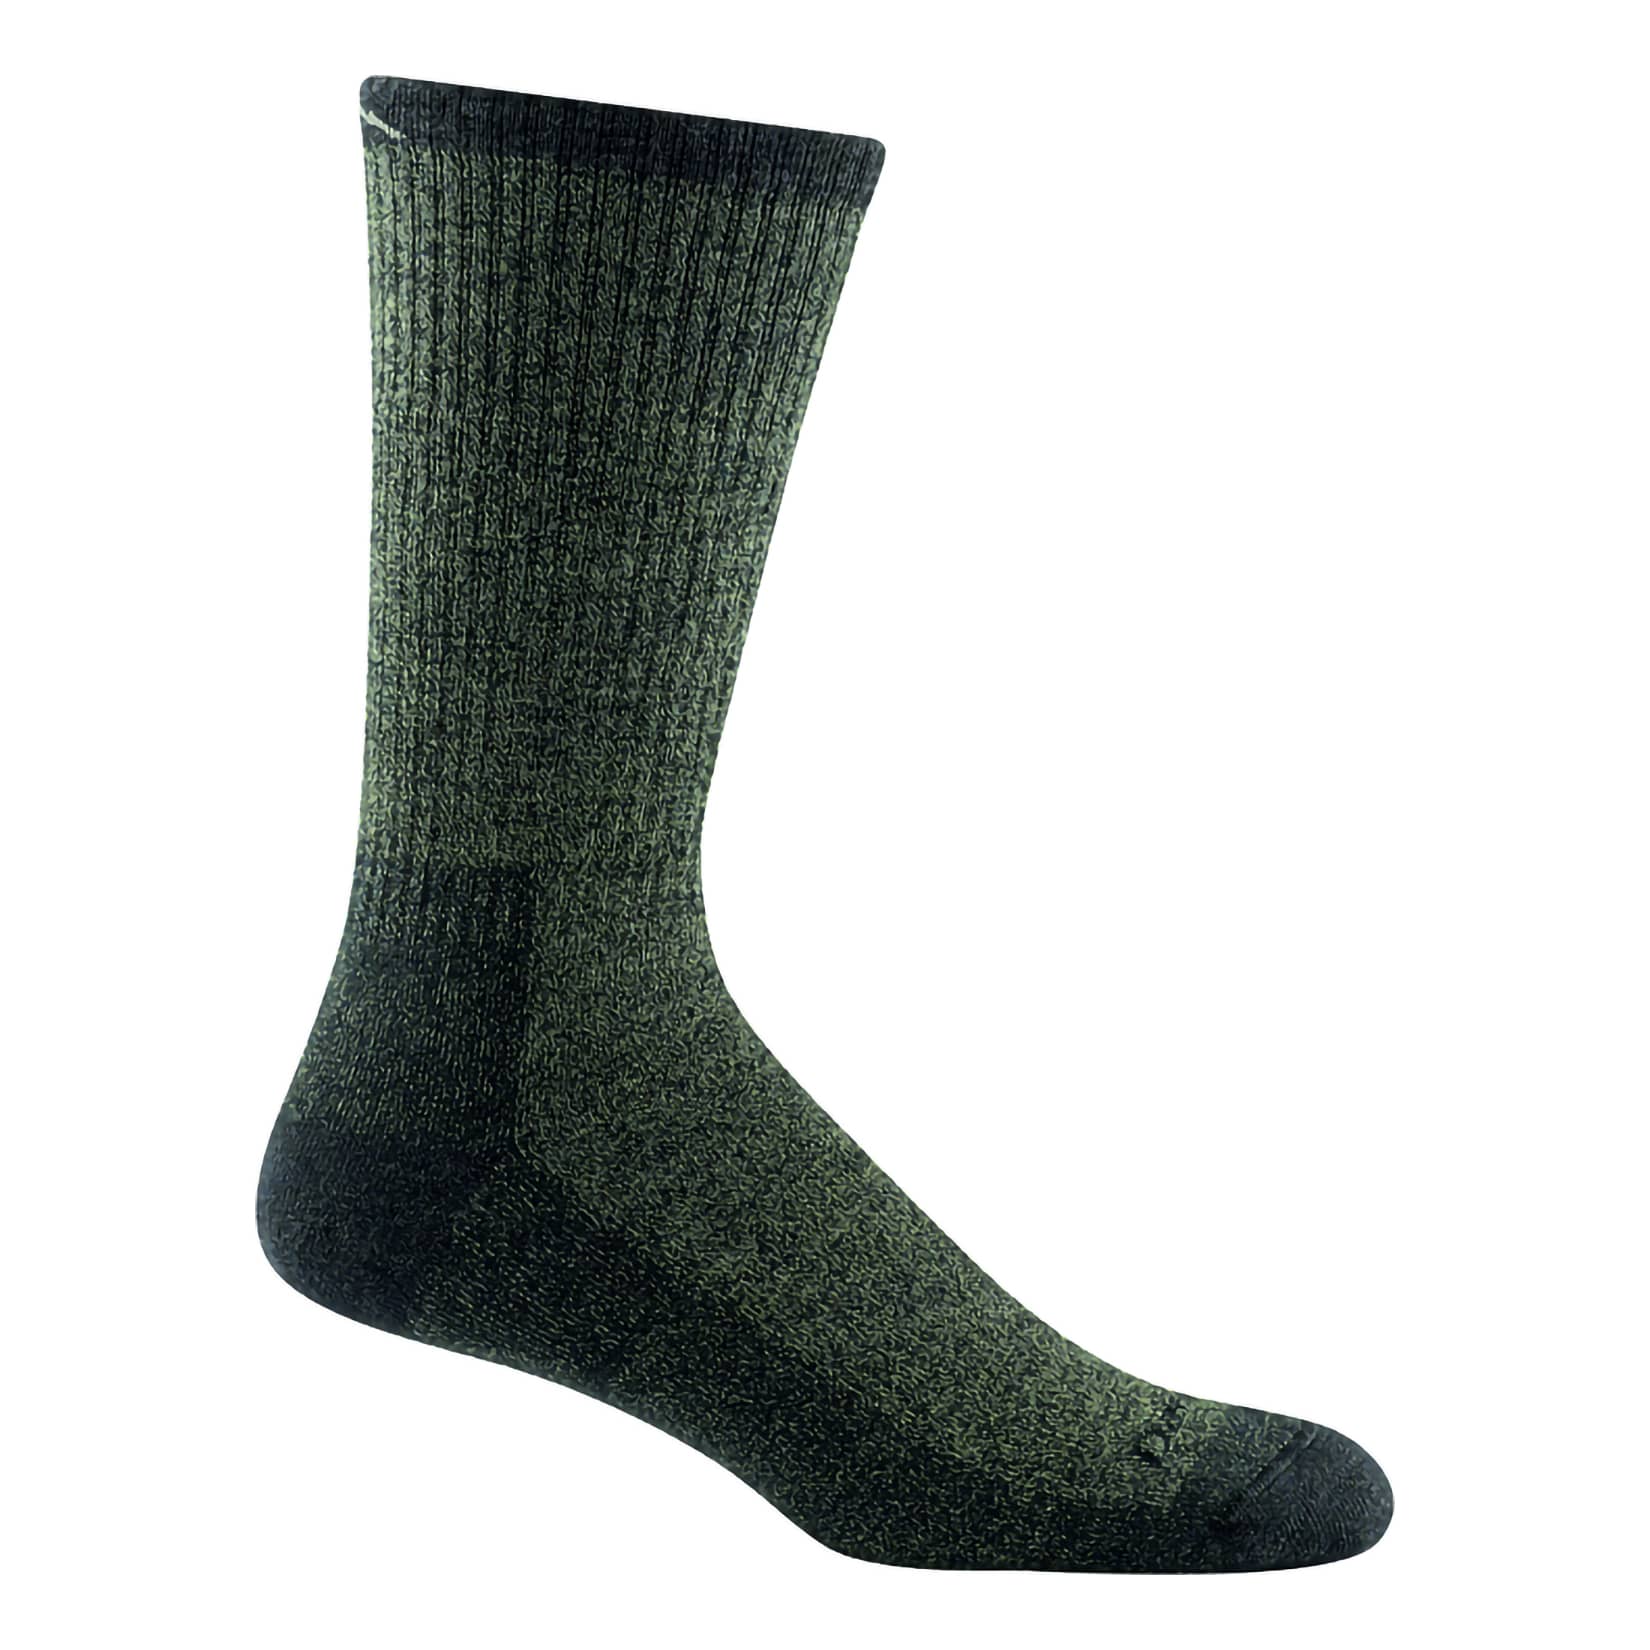 Darn Tough® Men’s Nomad Full Cushion Boot Sock - Moss